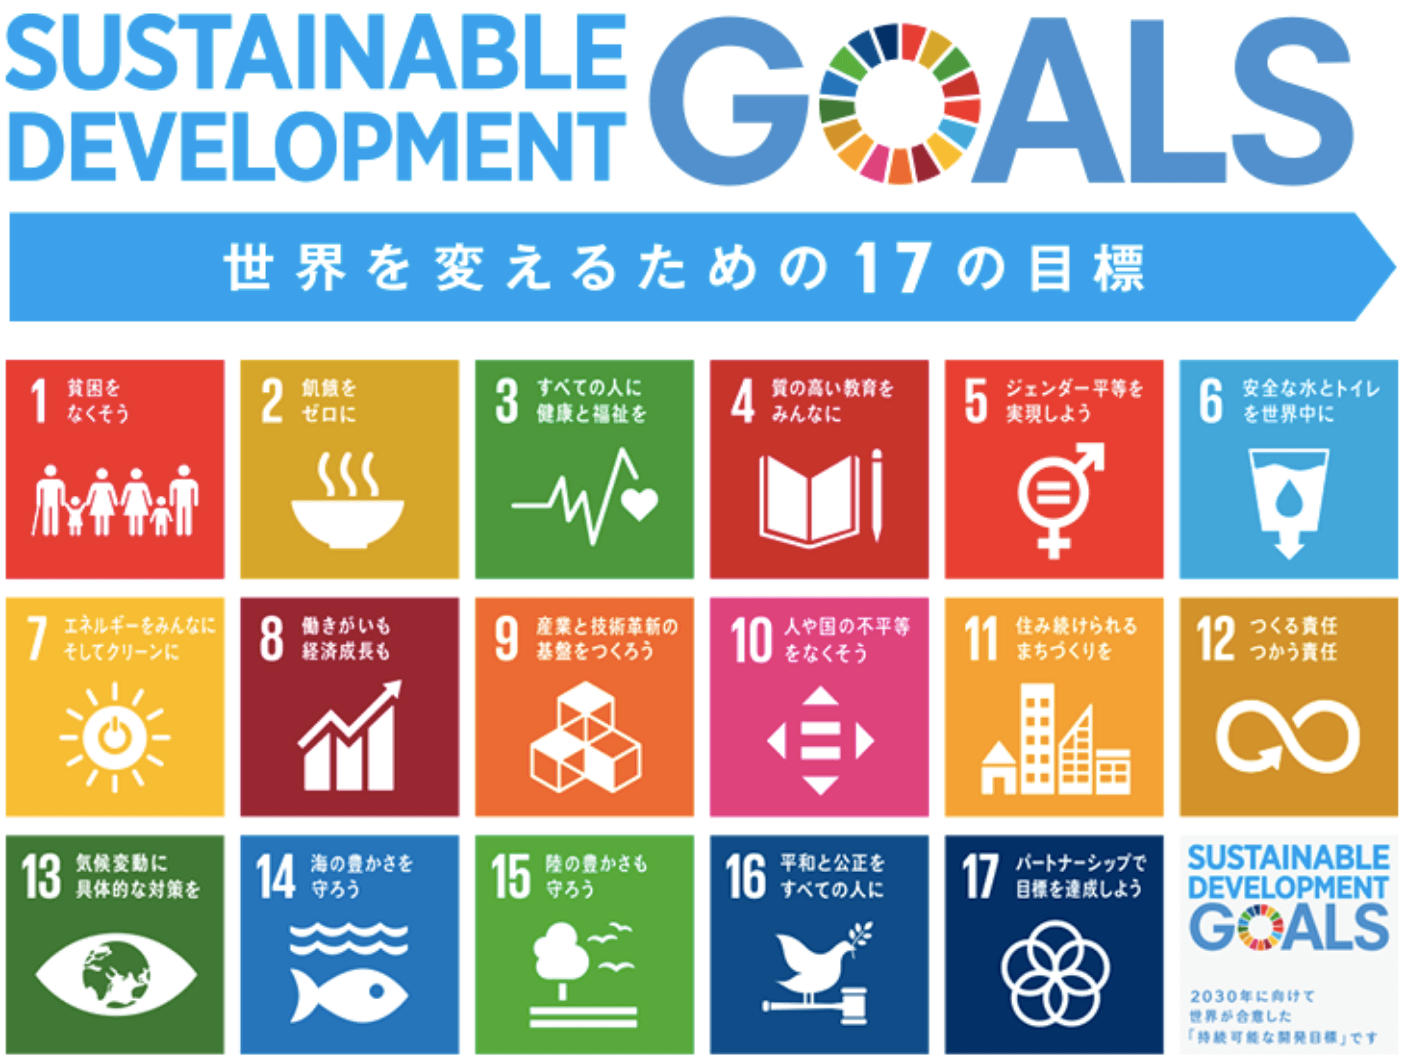 SDGsのイラスト